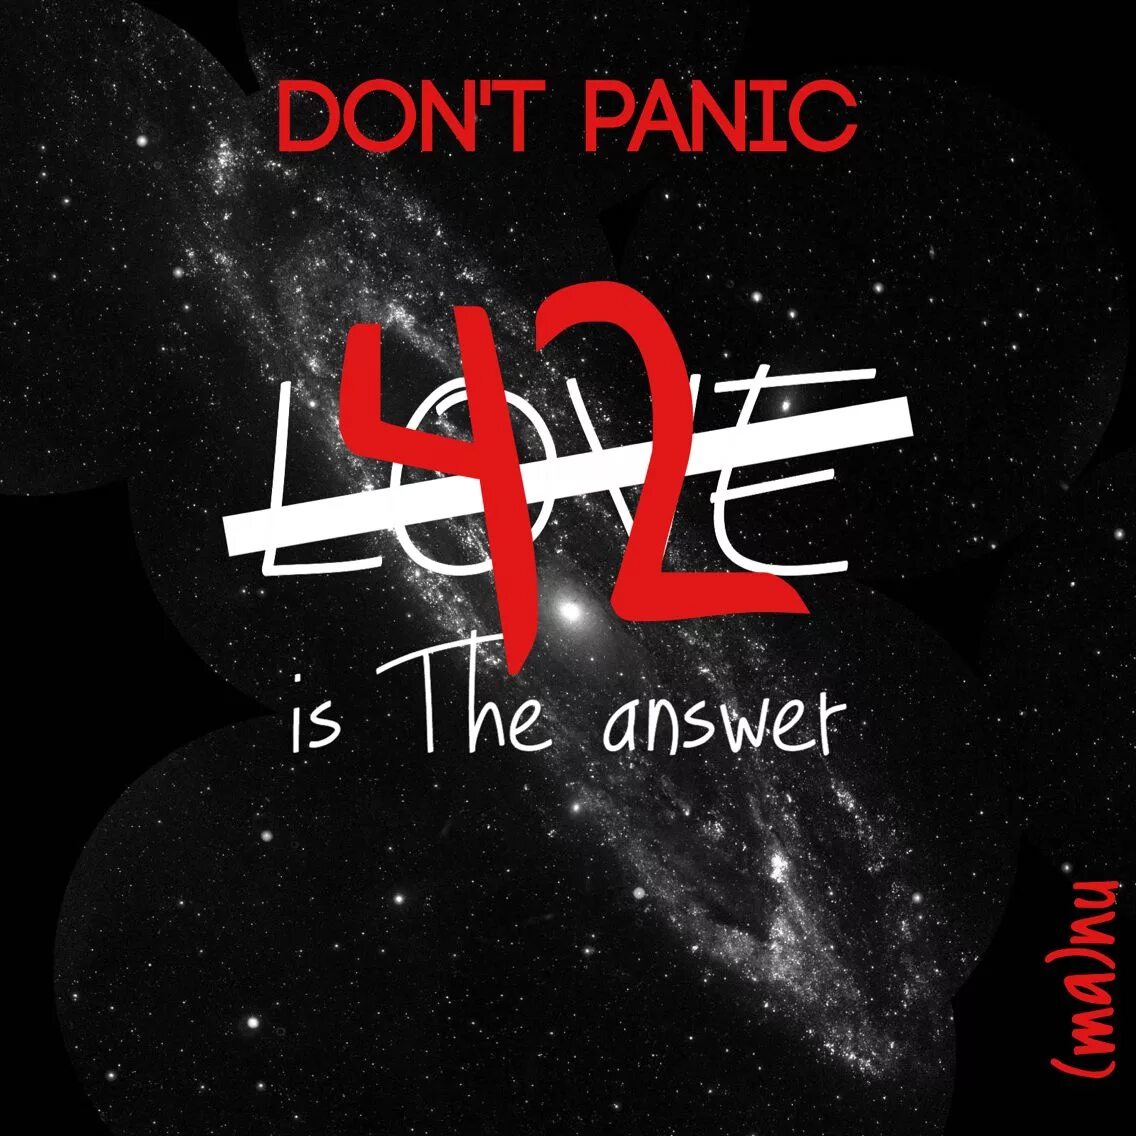 42 Don't Panic. Автостопом по галактике don't Panic 42. 42 Life Universe and everything. Don't Panic 42 is the answer.